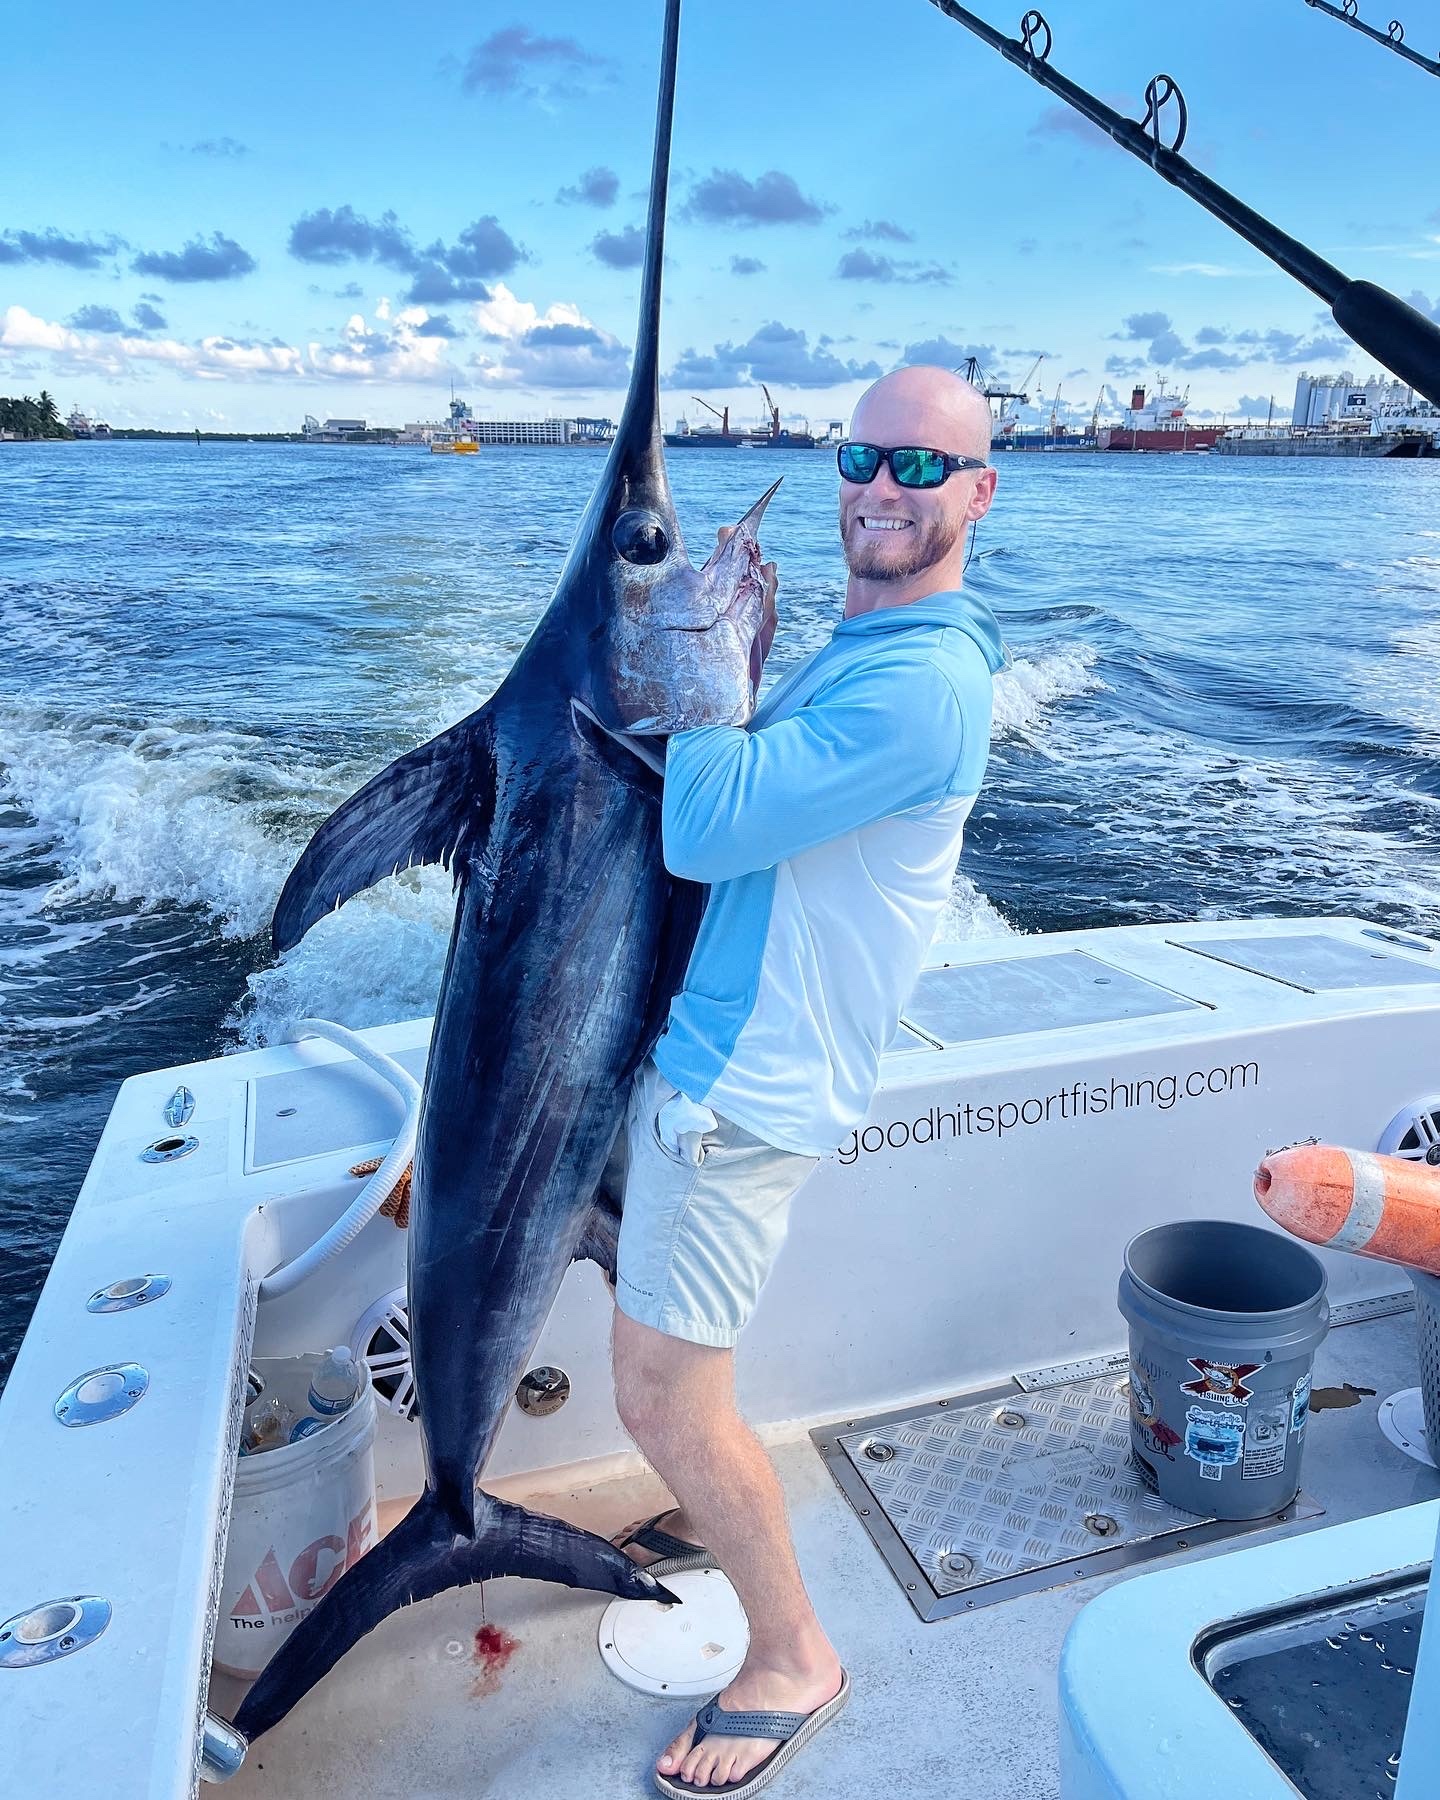 Private Swordfish Fishing Tour in Fort Lauderdale